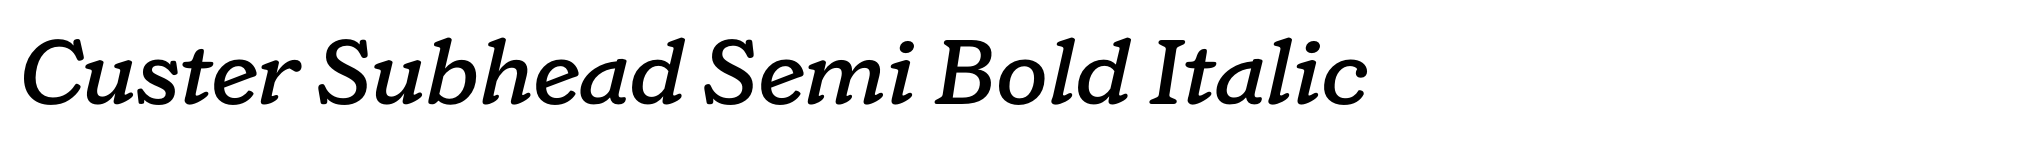 Custer Subhead Semi Bold Italic image